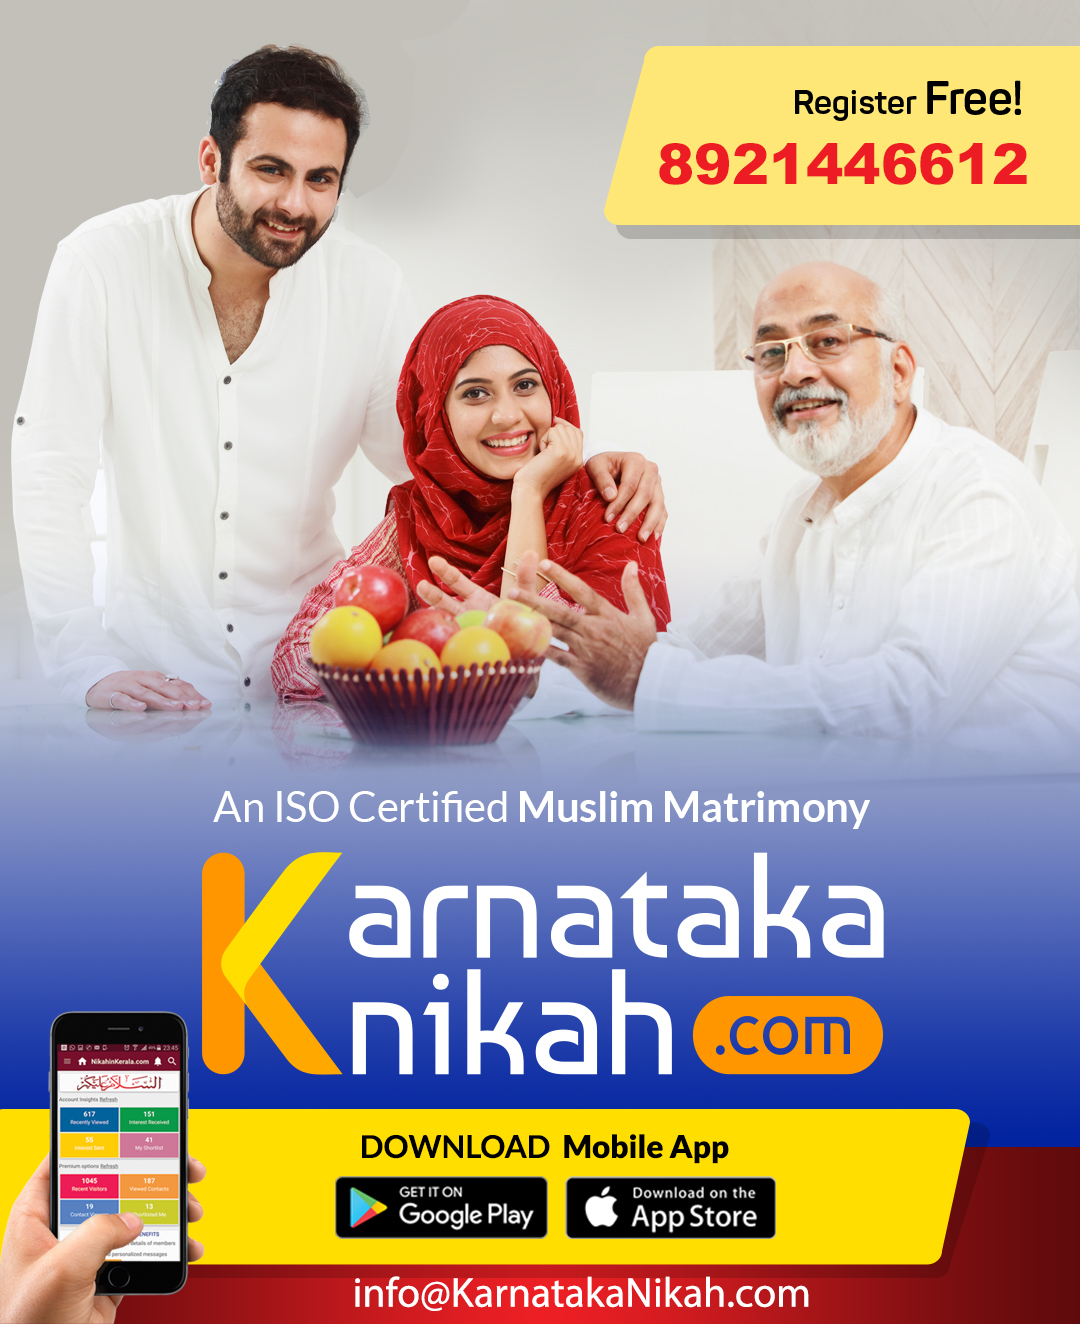 Free Muslim matrimonial website in Bangalore- Muslim Marriage site Bangalore- Karnataka Nikah